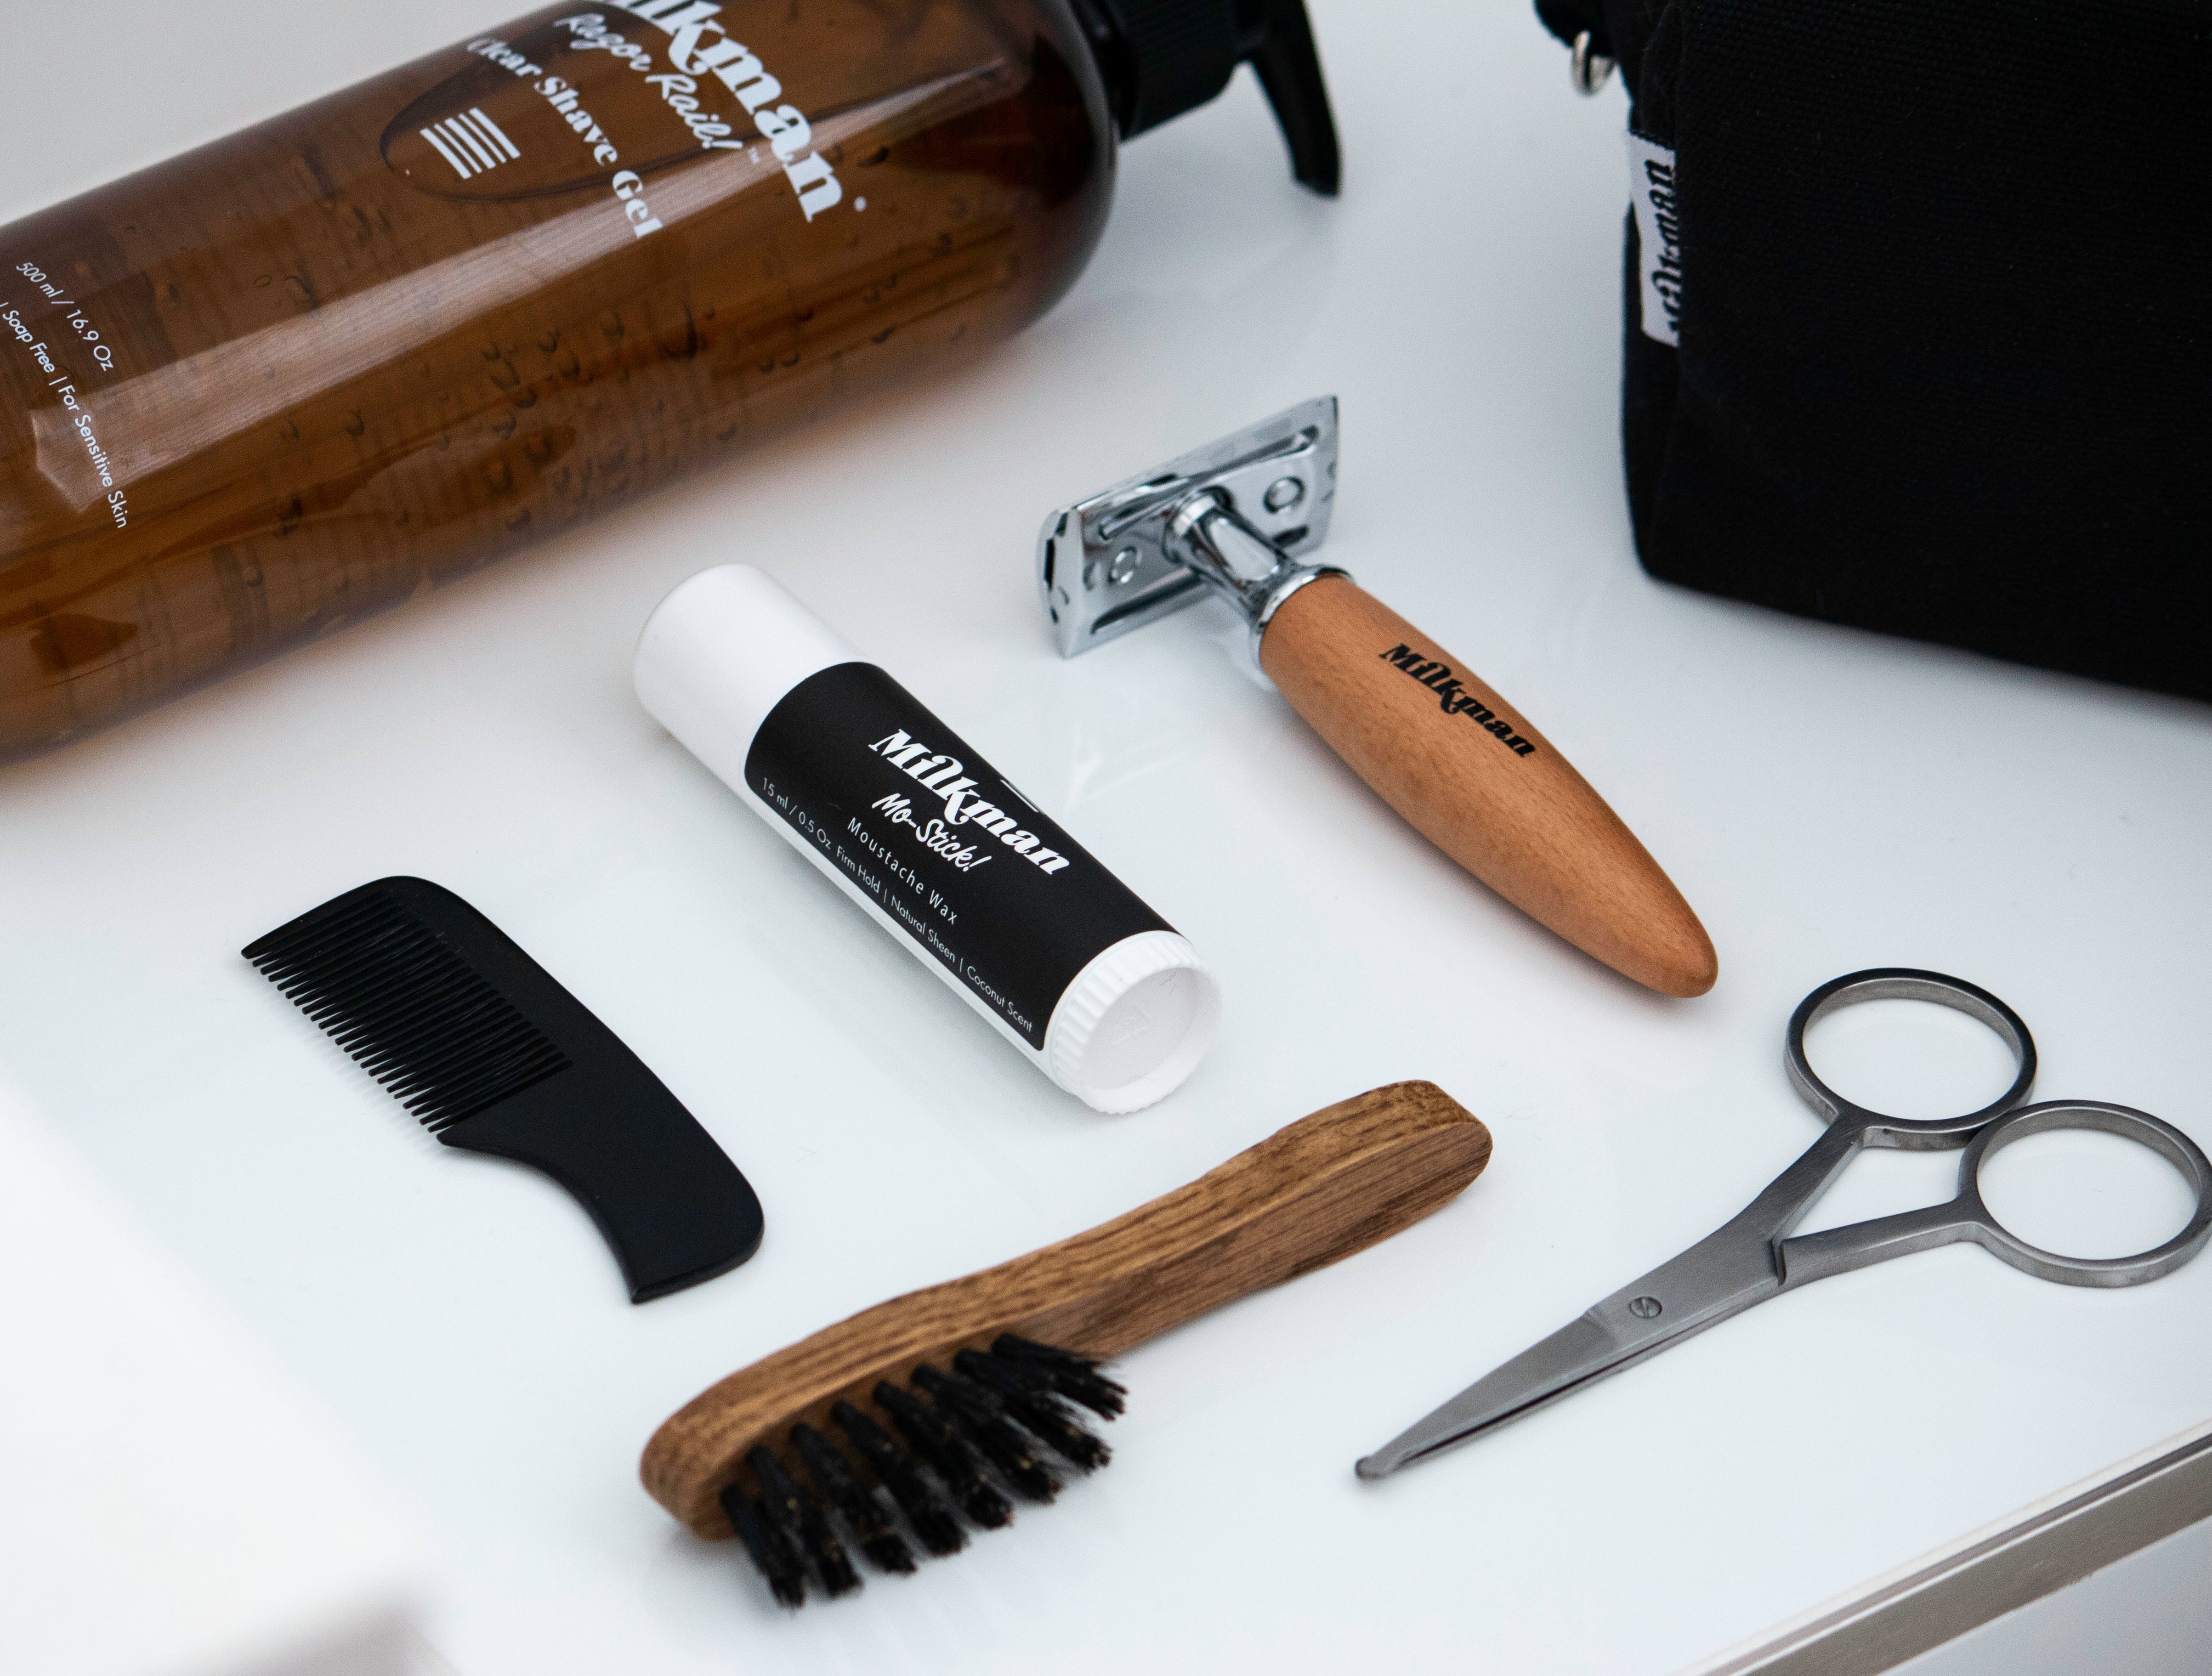 milkman moustache styling tools including moustache wax